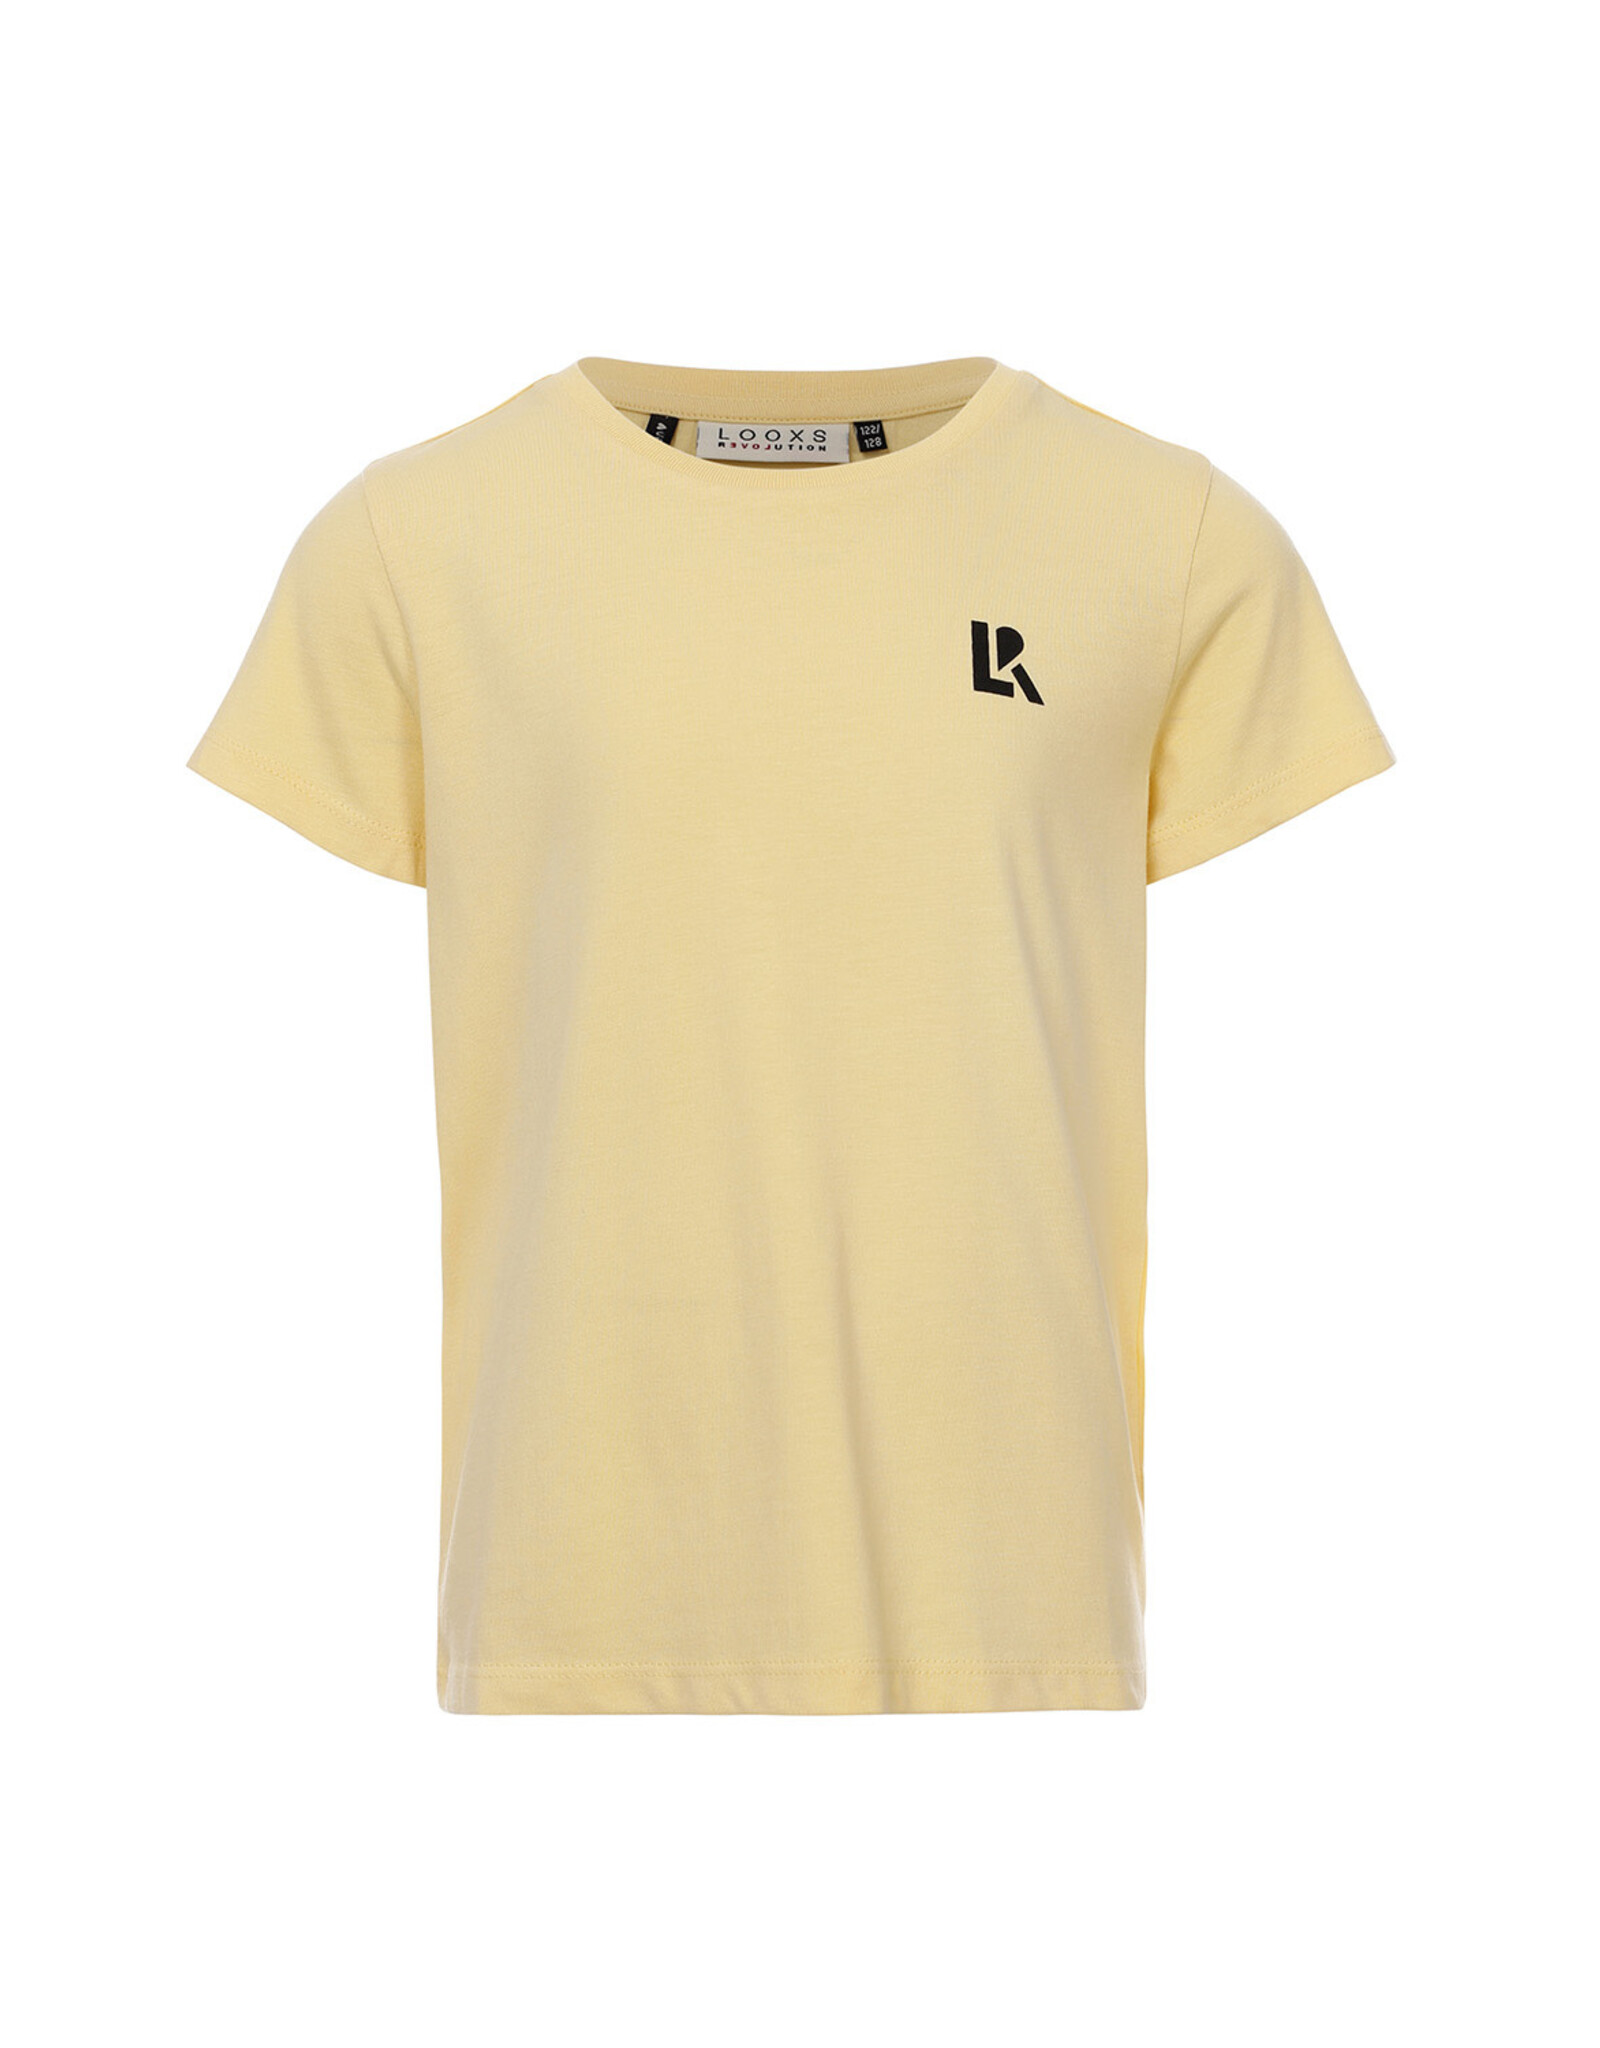 Looxs 10Sixteen T-shirt Soft yellow